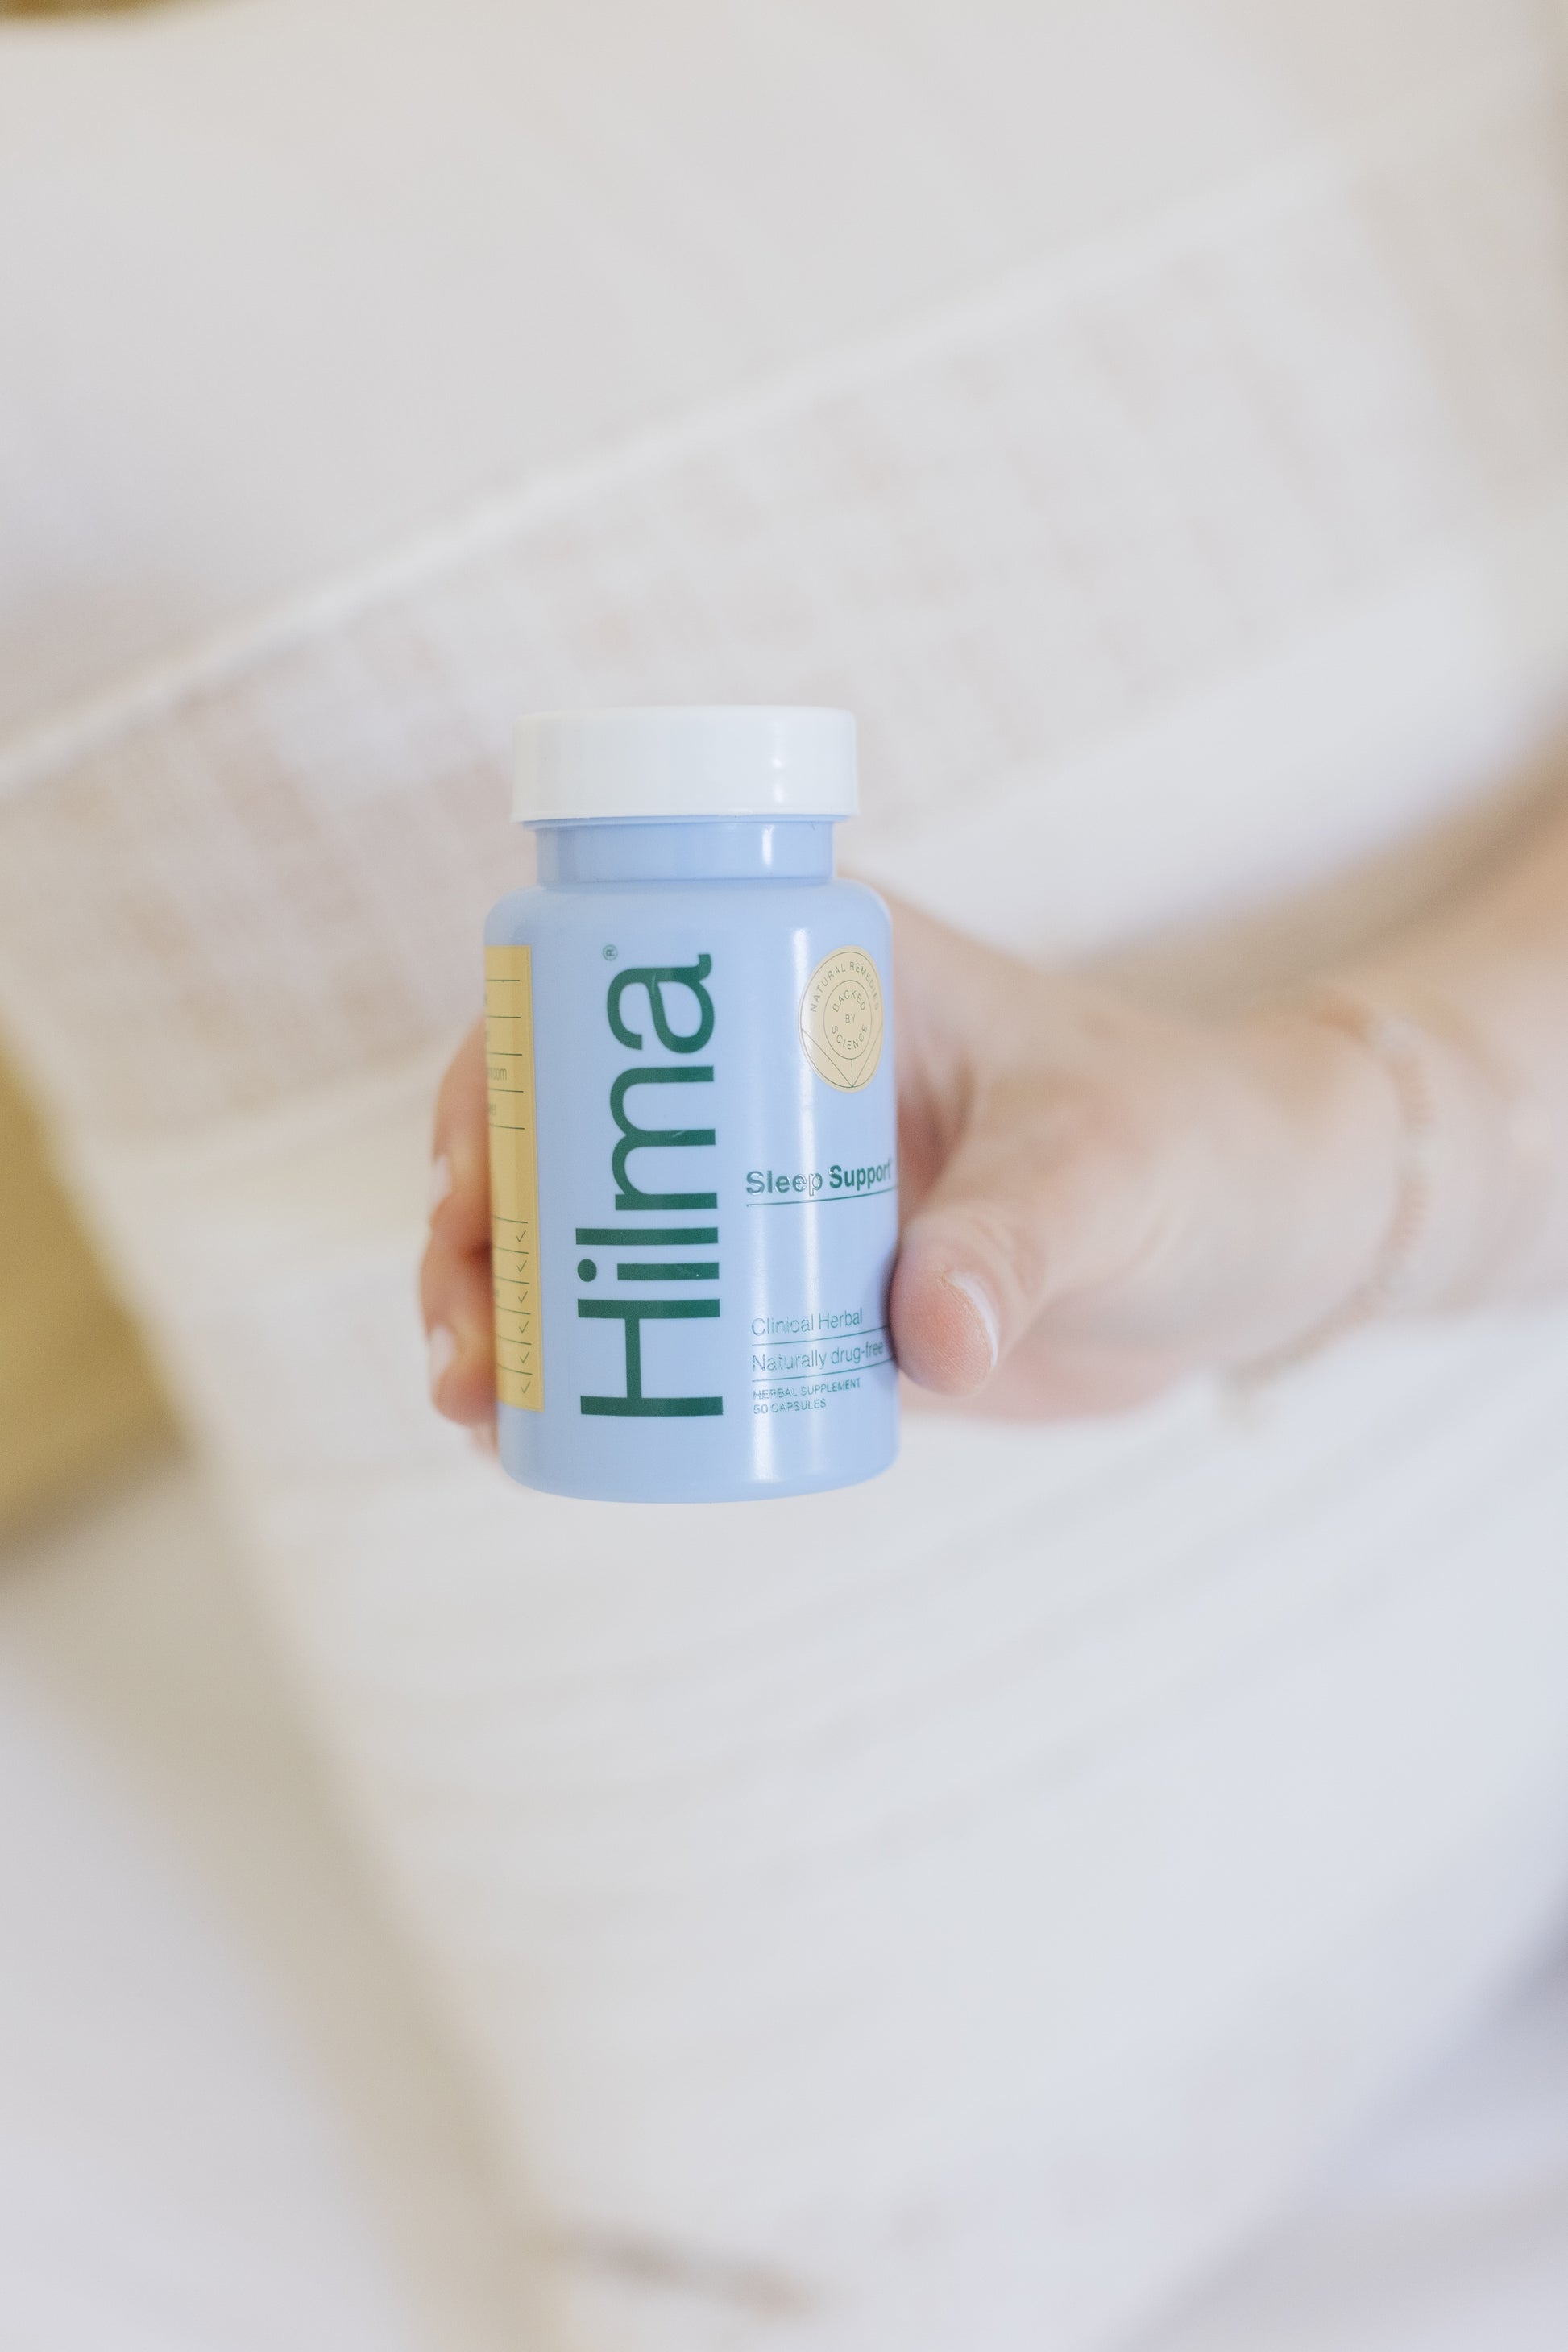 A bottle of Hilma Sleep Support